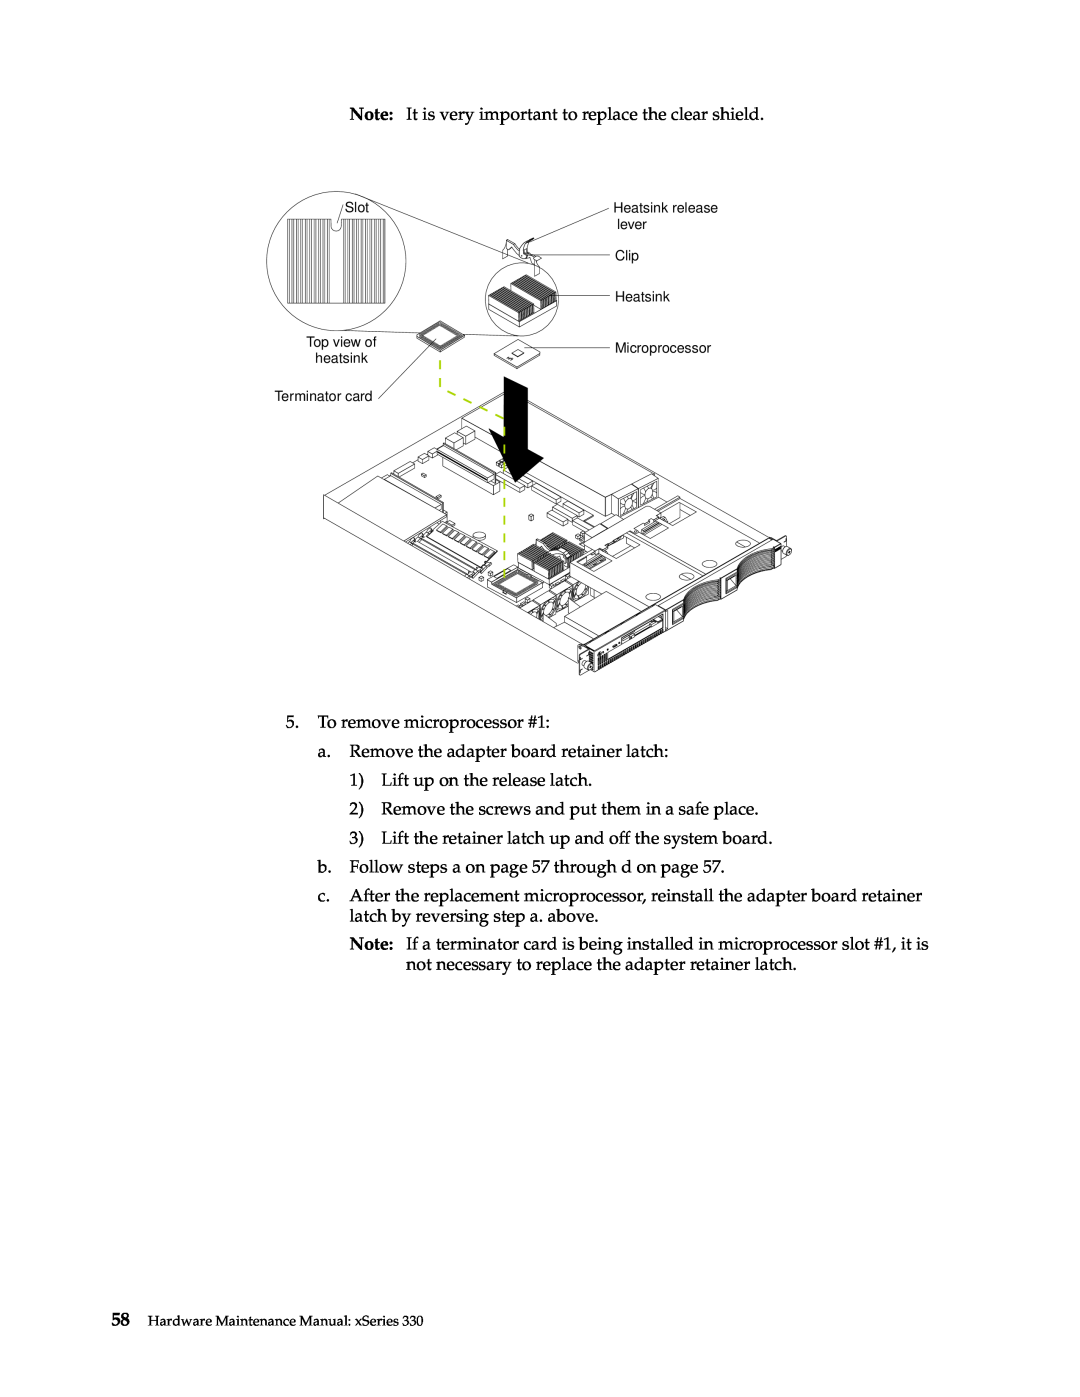 IBM xSeries 330 manual To remove microprocessor #1 